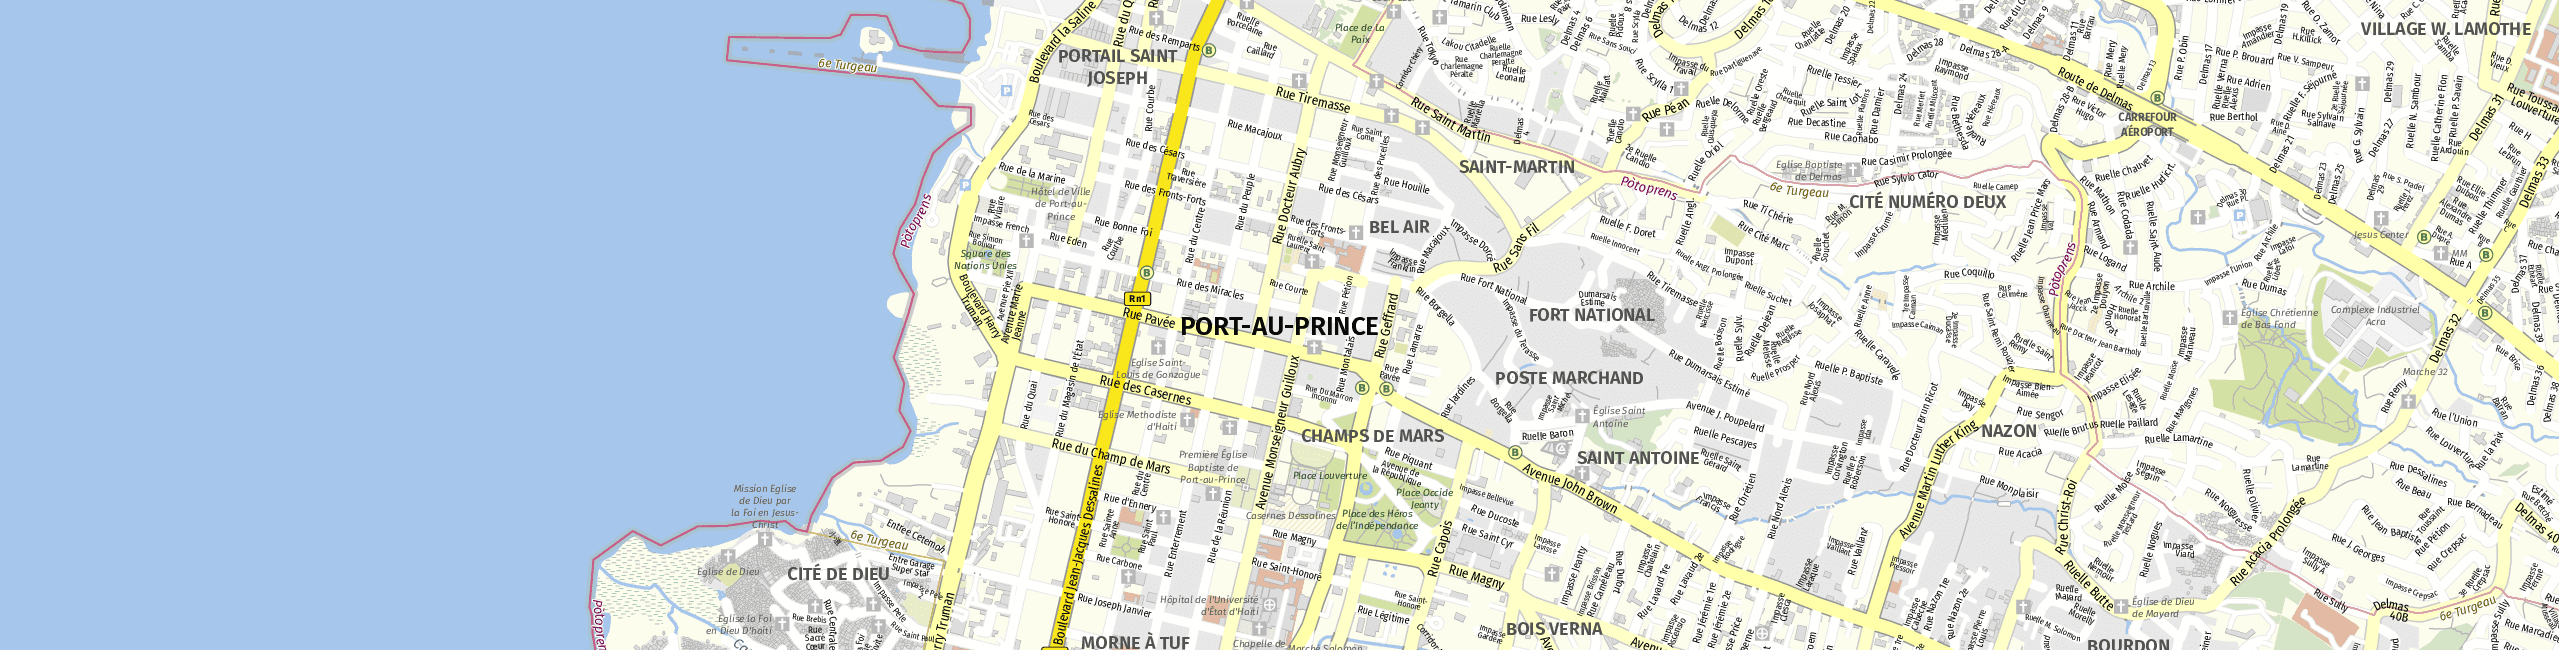 Stadtplan Port-au-Prince zum Downloaden.